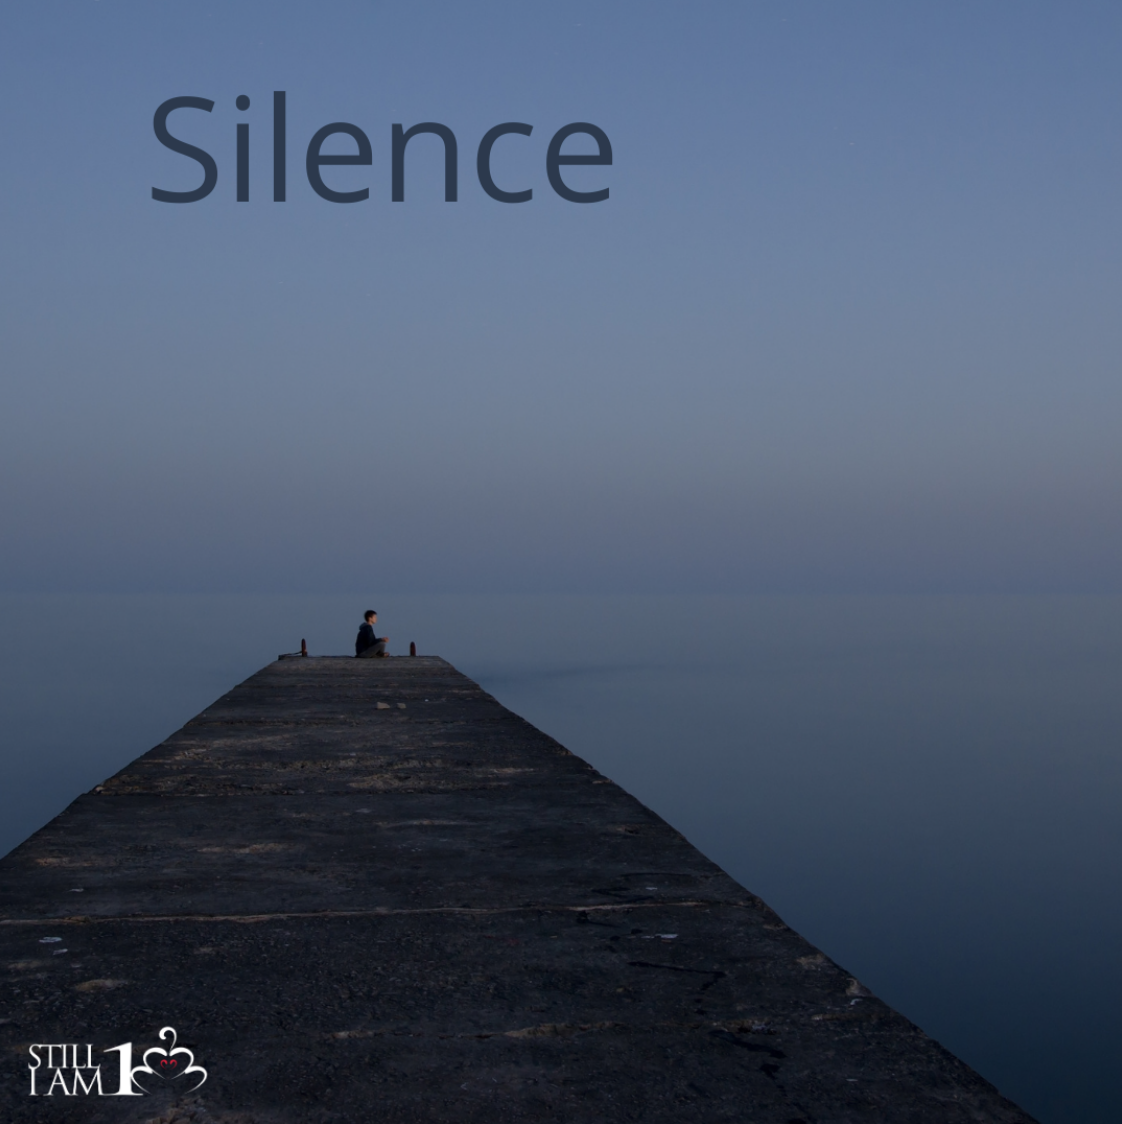 Stillness or Silence